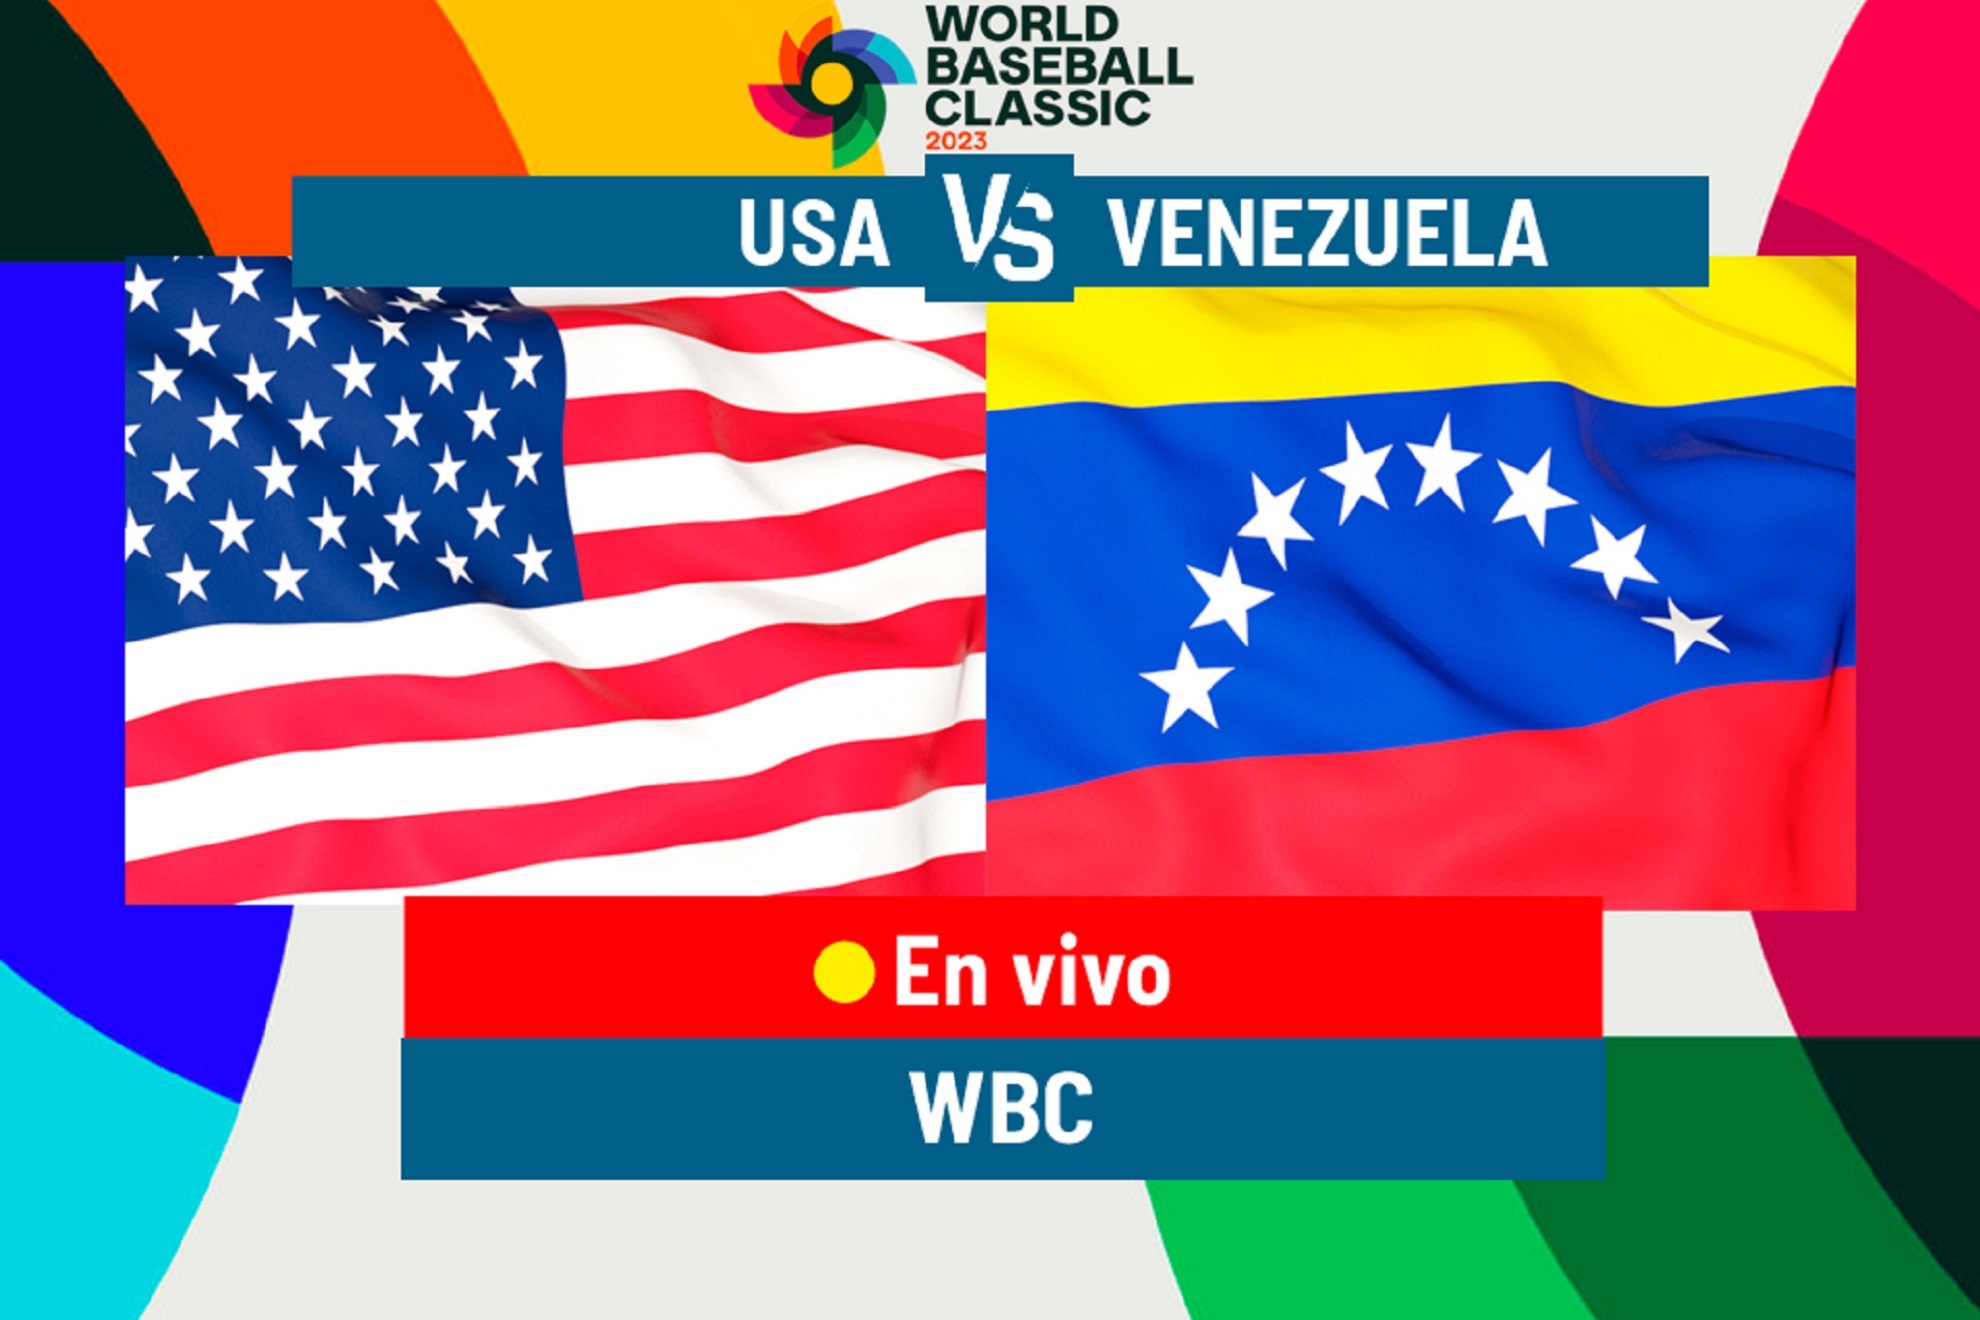 USA vs Venezuela Clásico Mundial de Beisbol en vivo. USA elimina a una